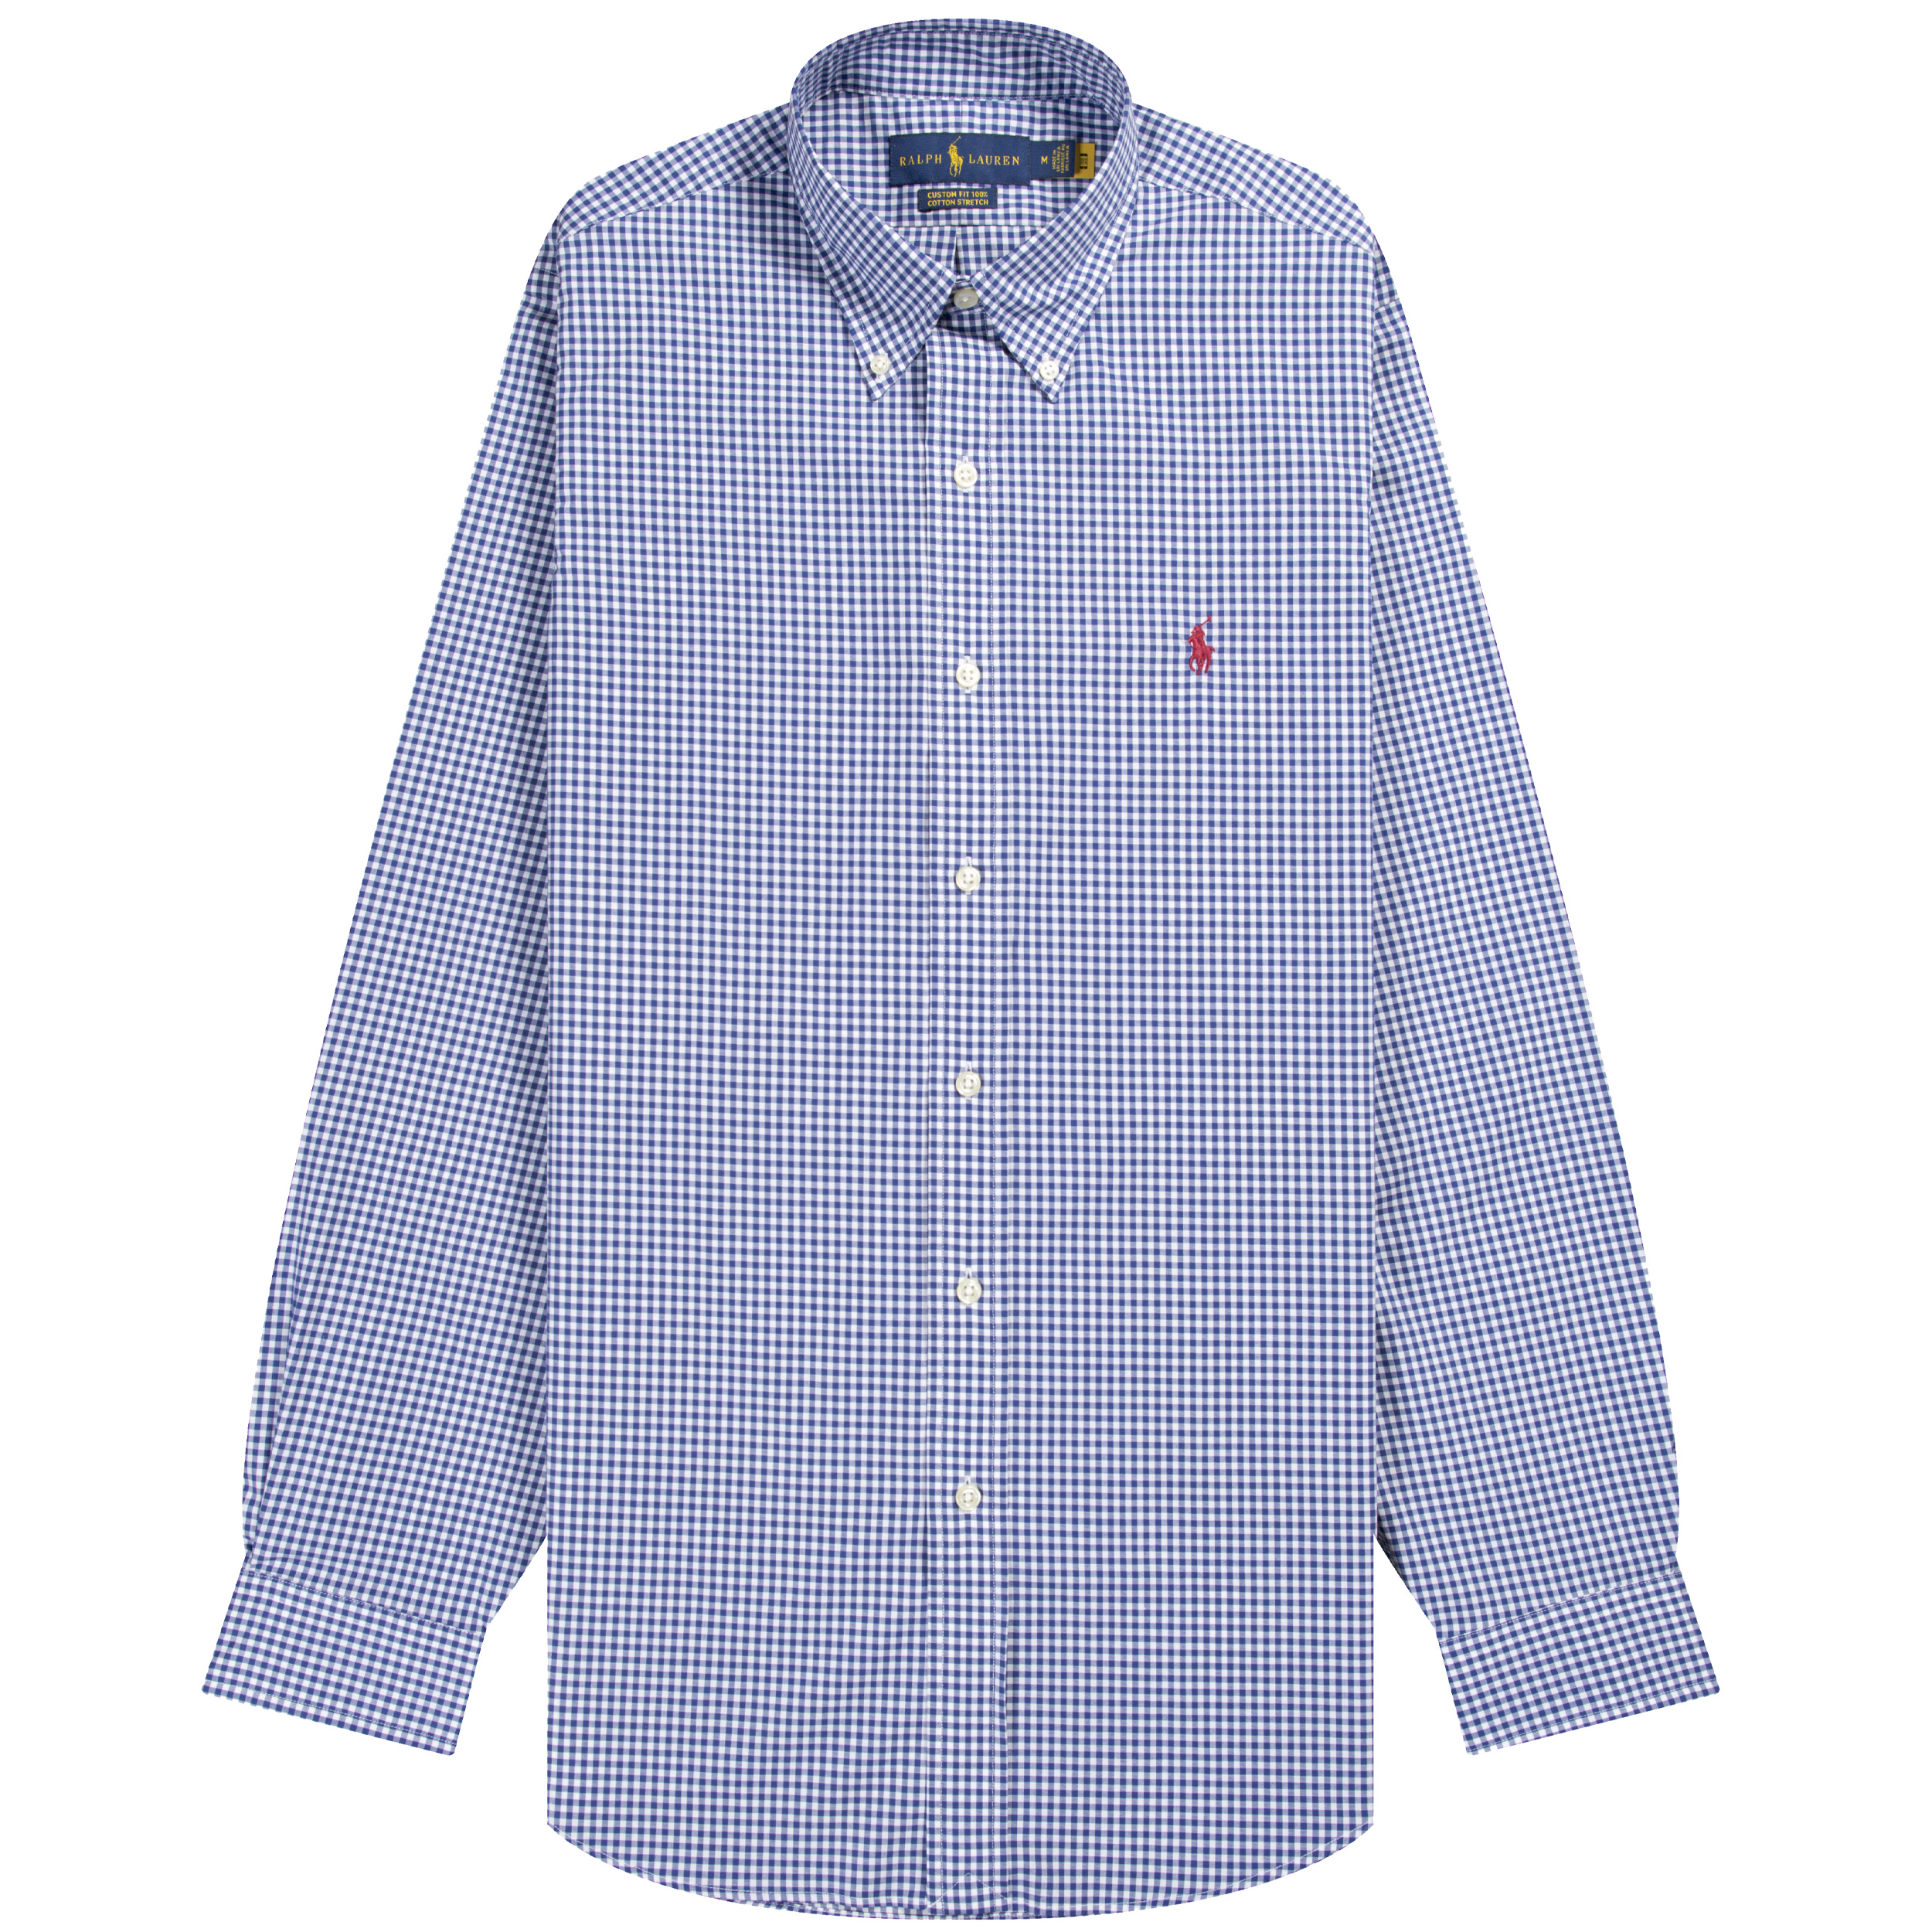 Polo Ralph Lauren Gingham Check Shirt Blue/White